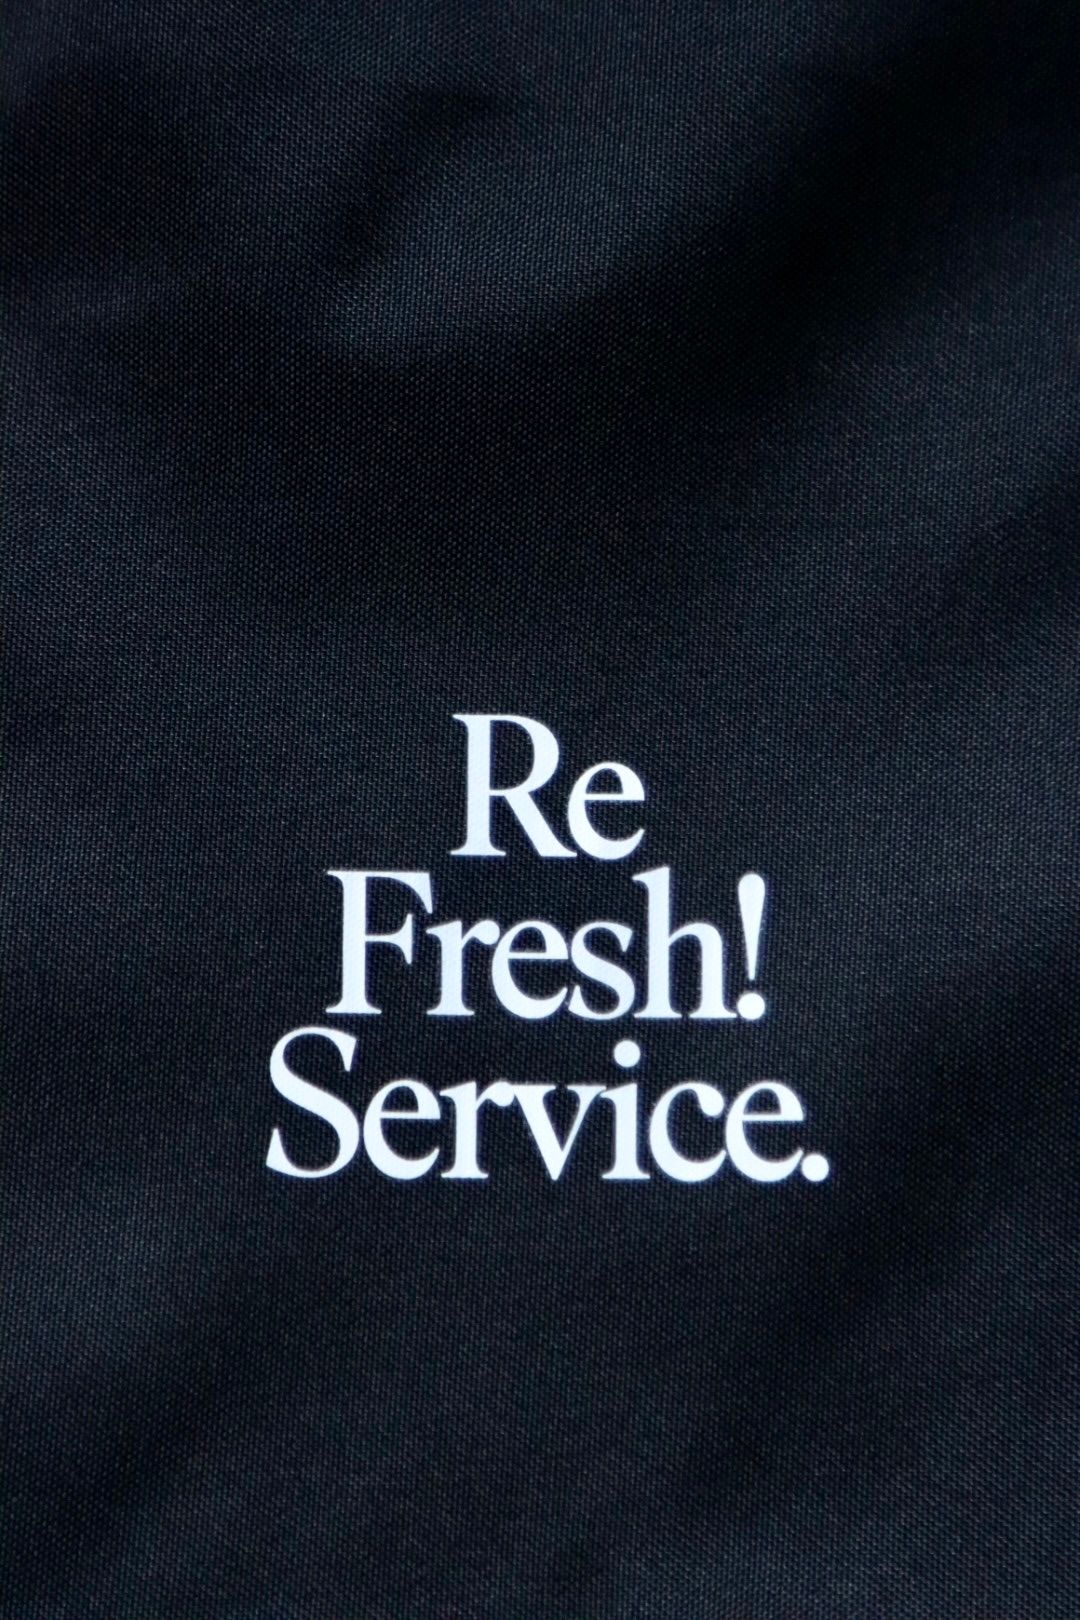 FreshService - ReFresh!Service. SAUNA KNAPSACK